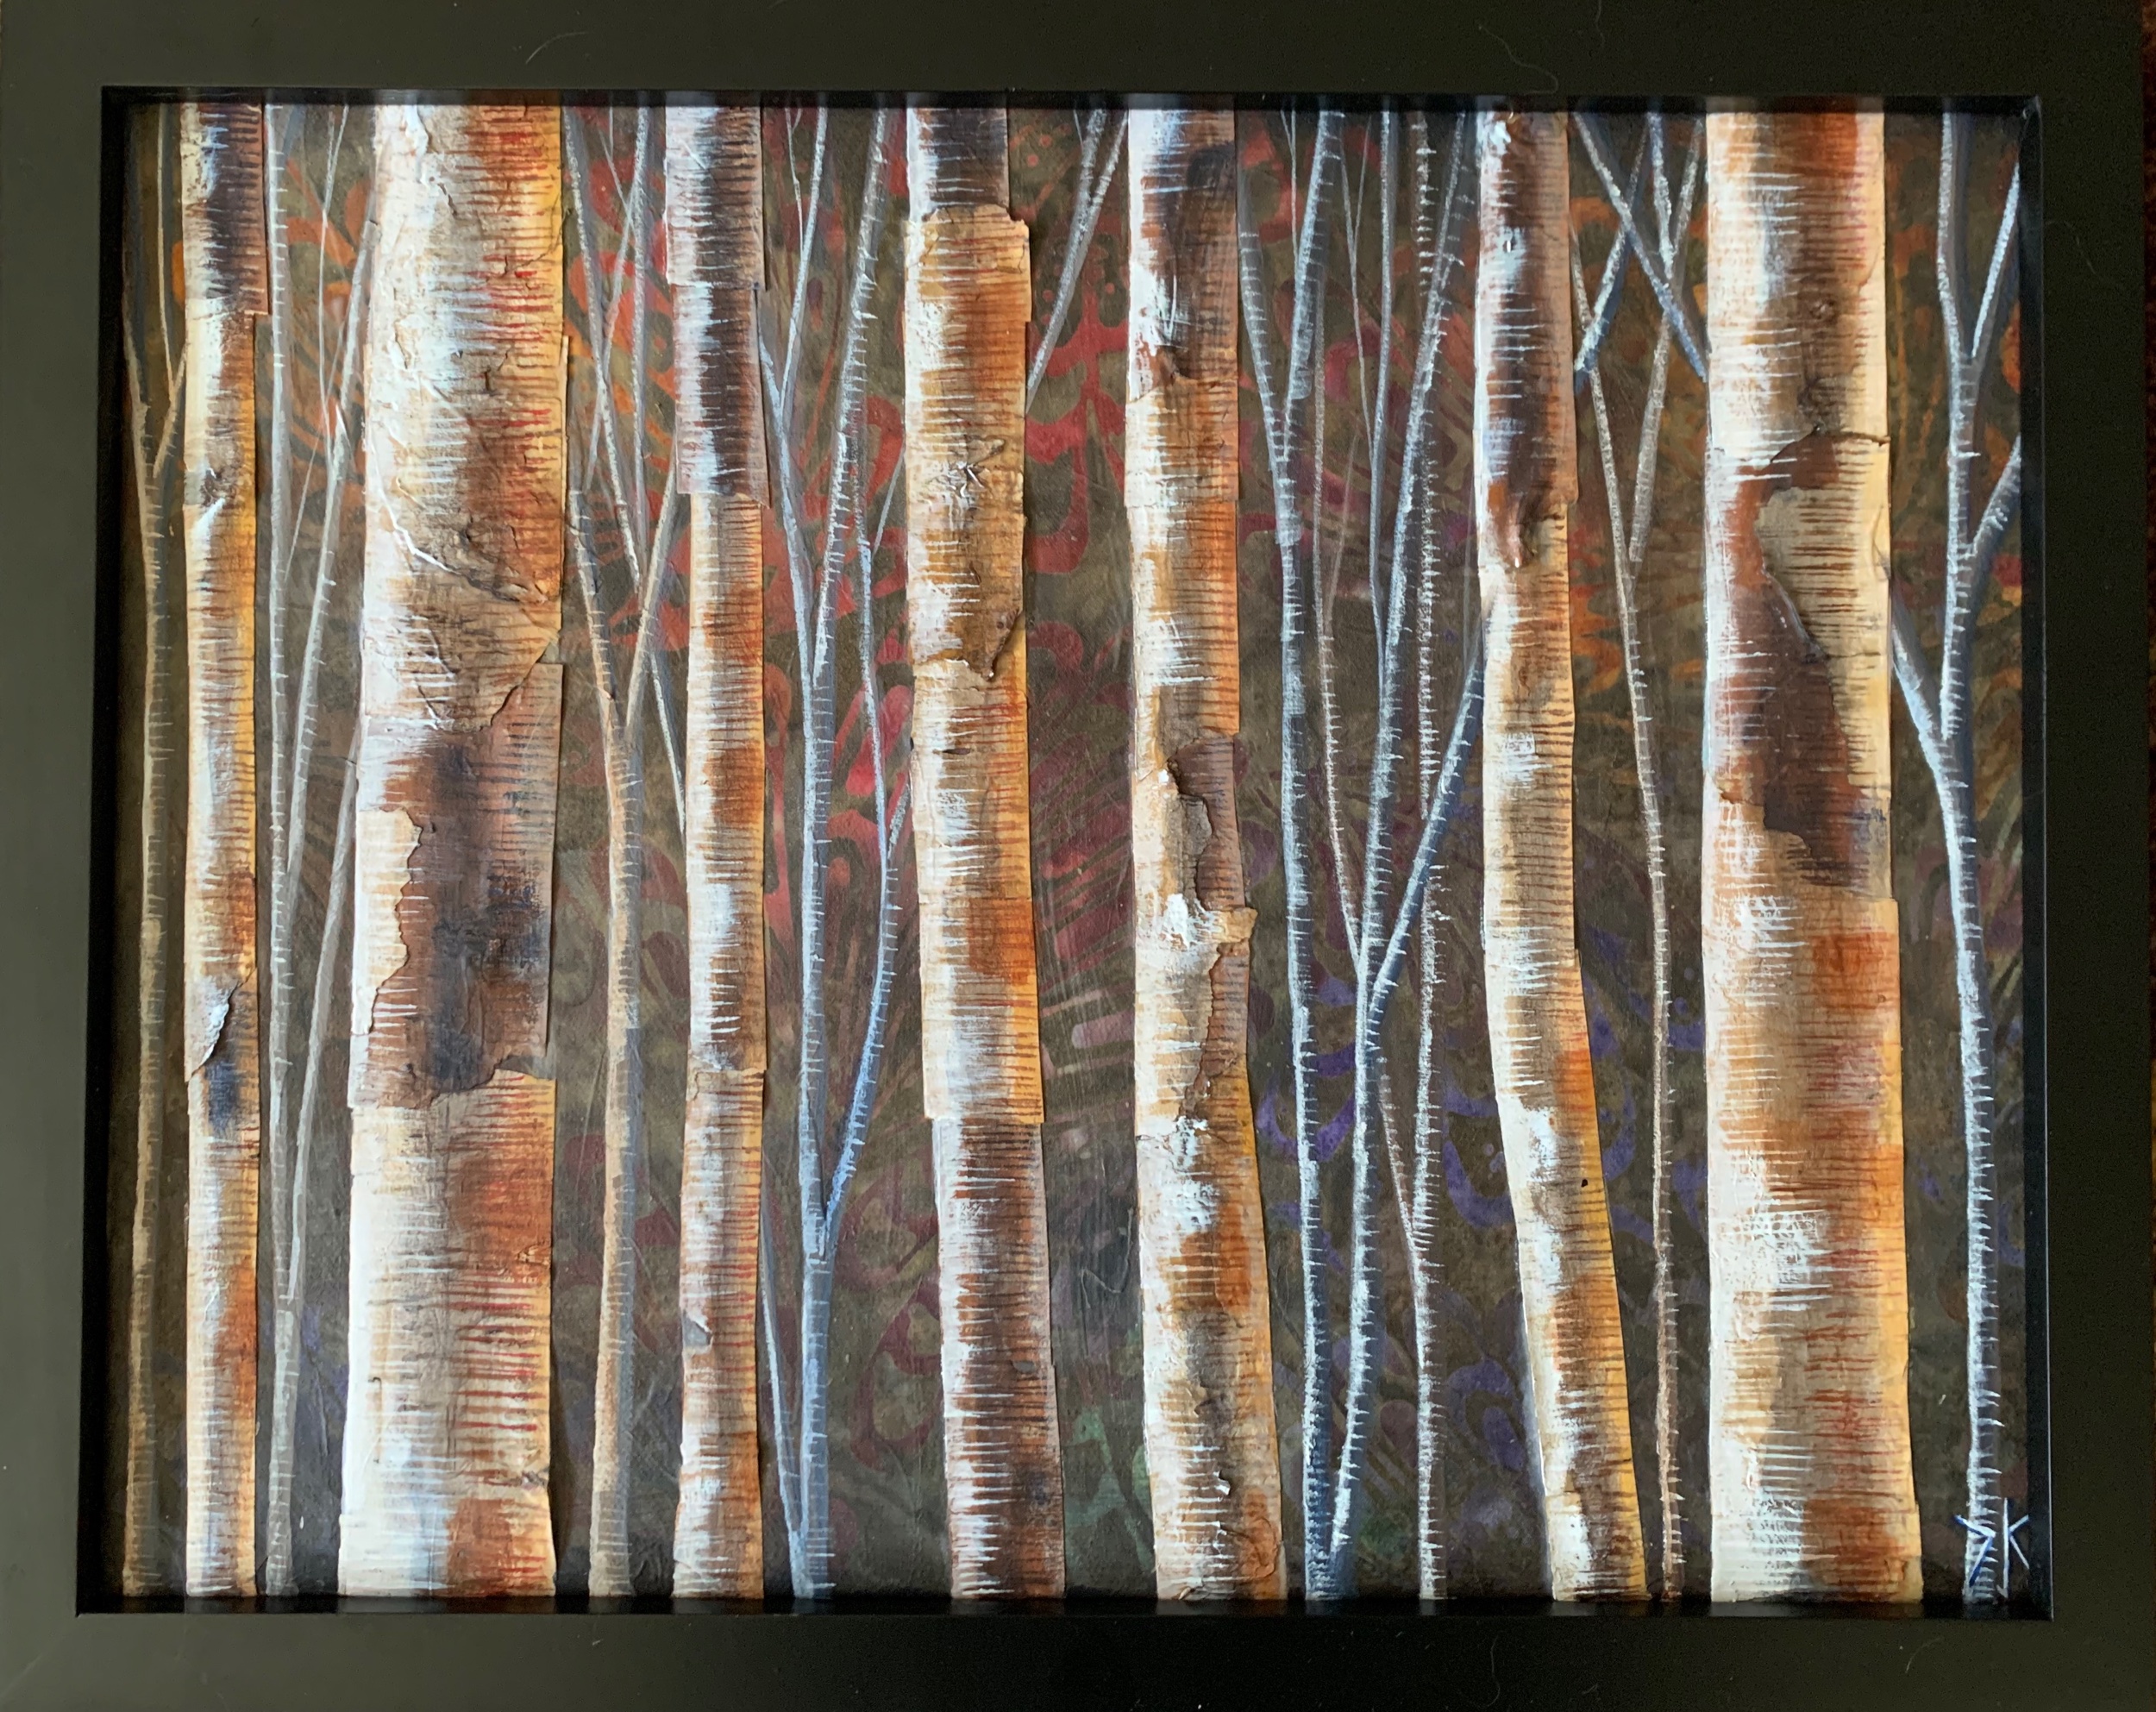  Sold Mixed Media: birch bark and acrylic on fabric. 11” x 14” 